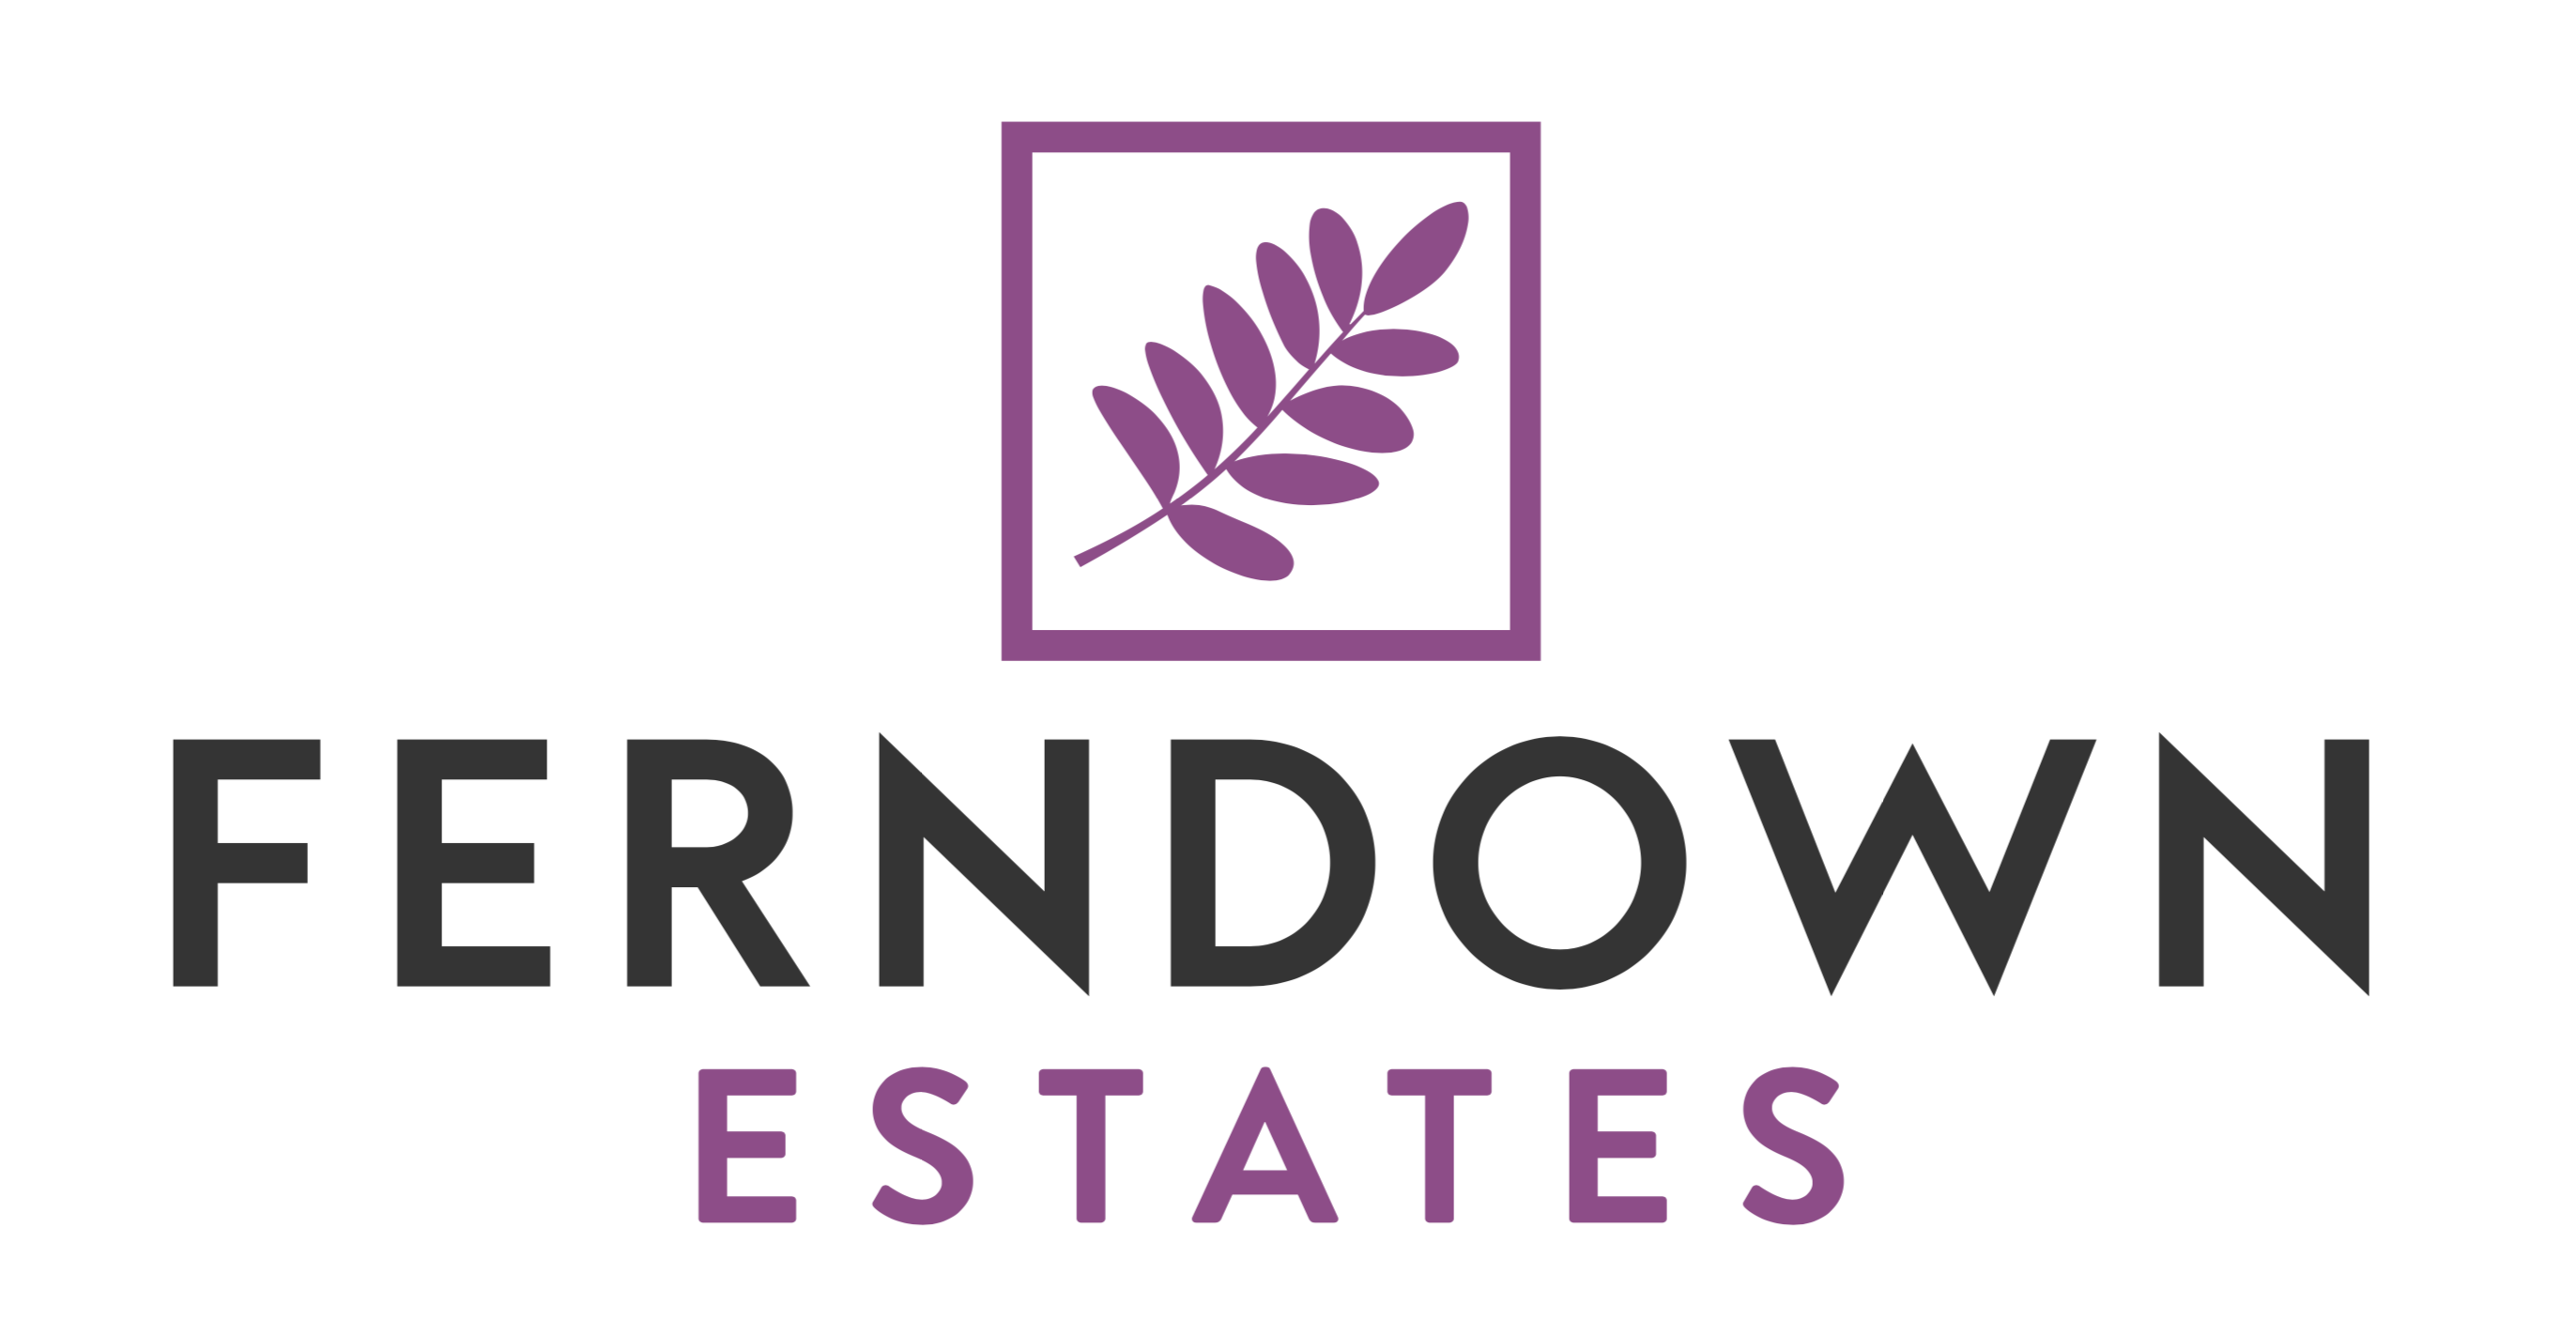 Ferndown estates